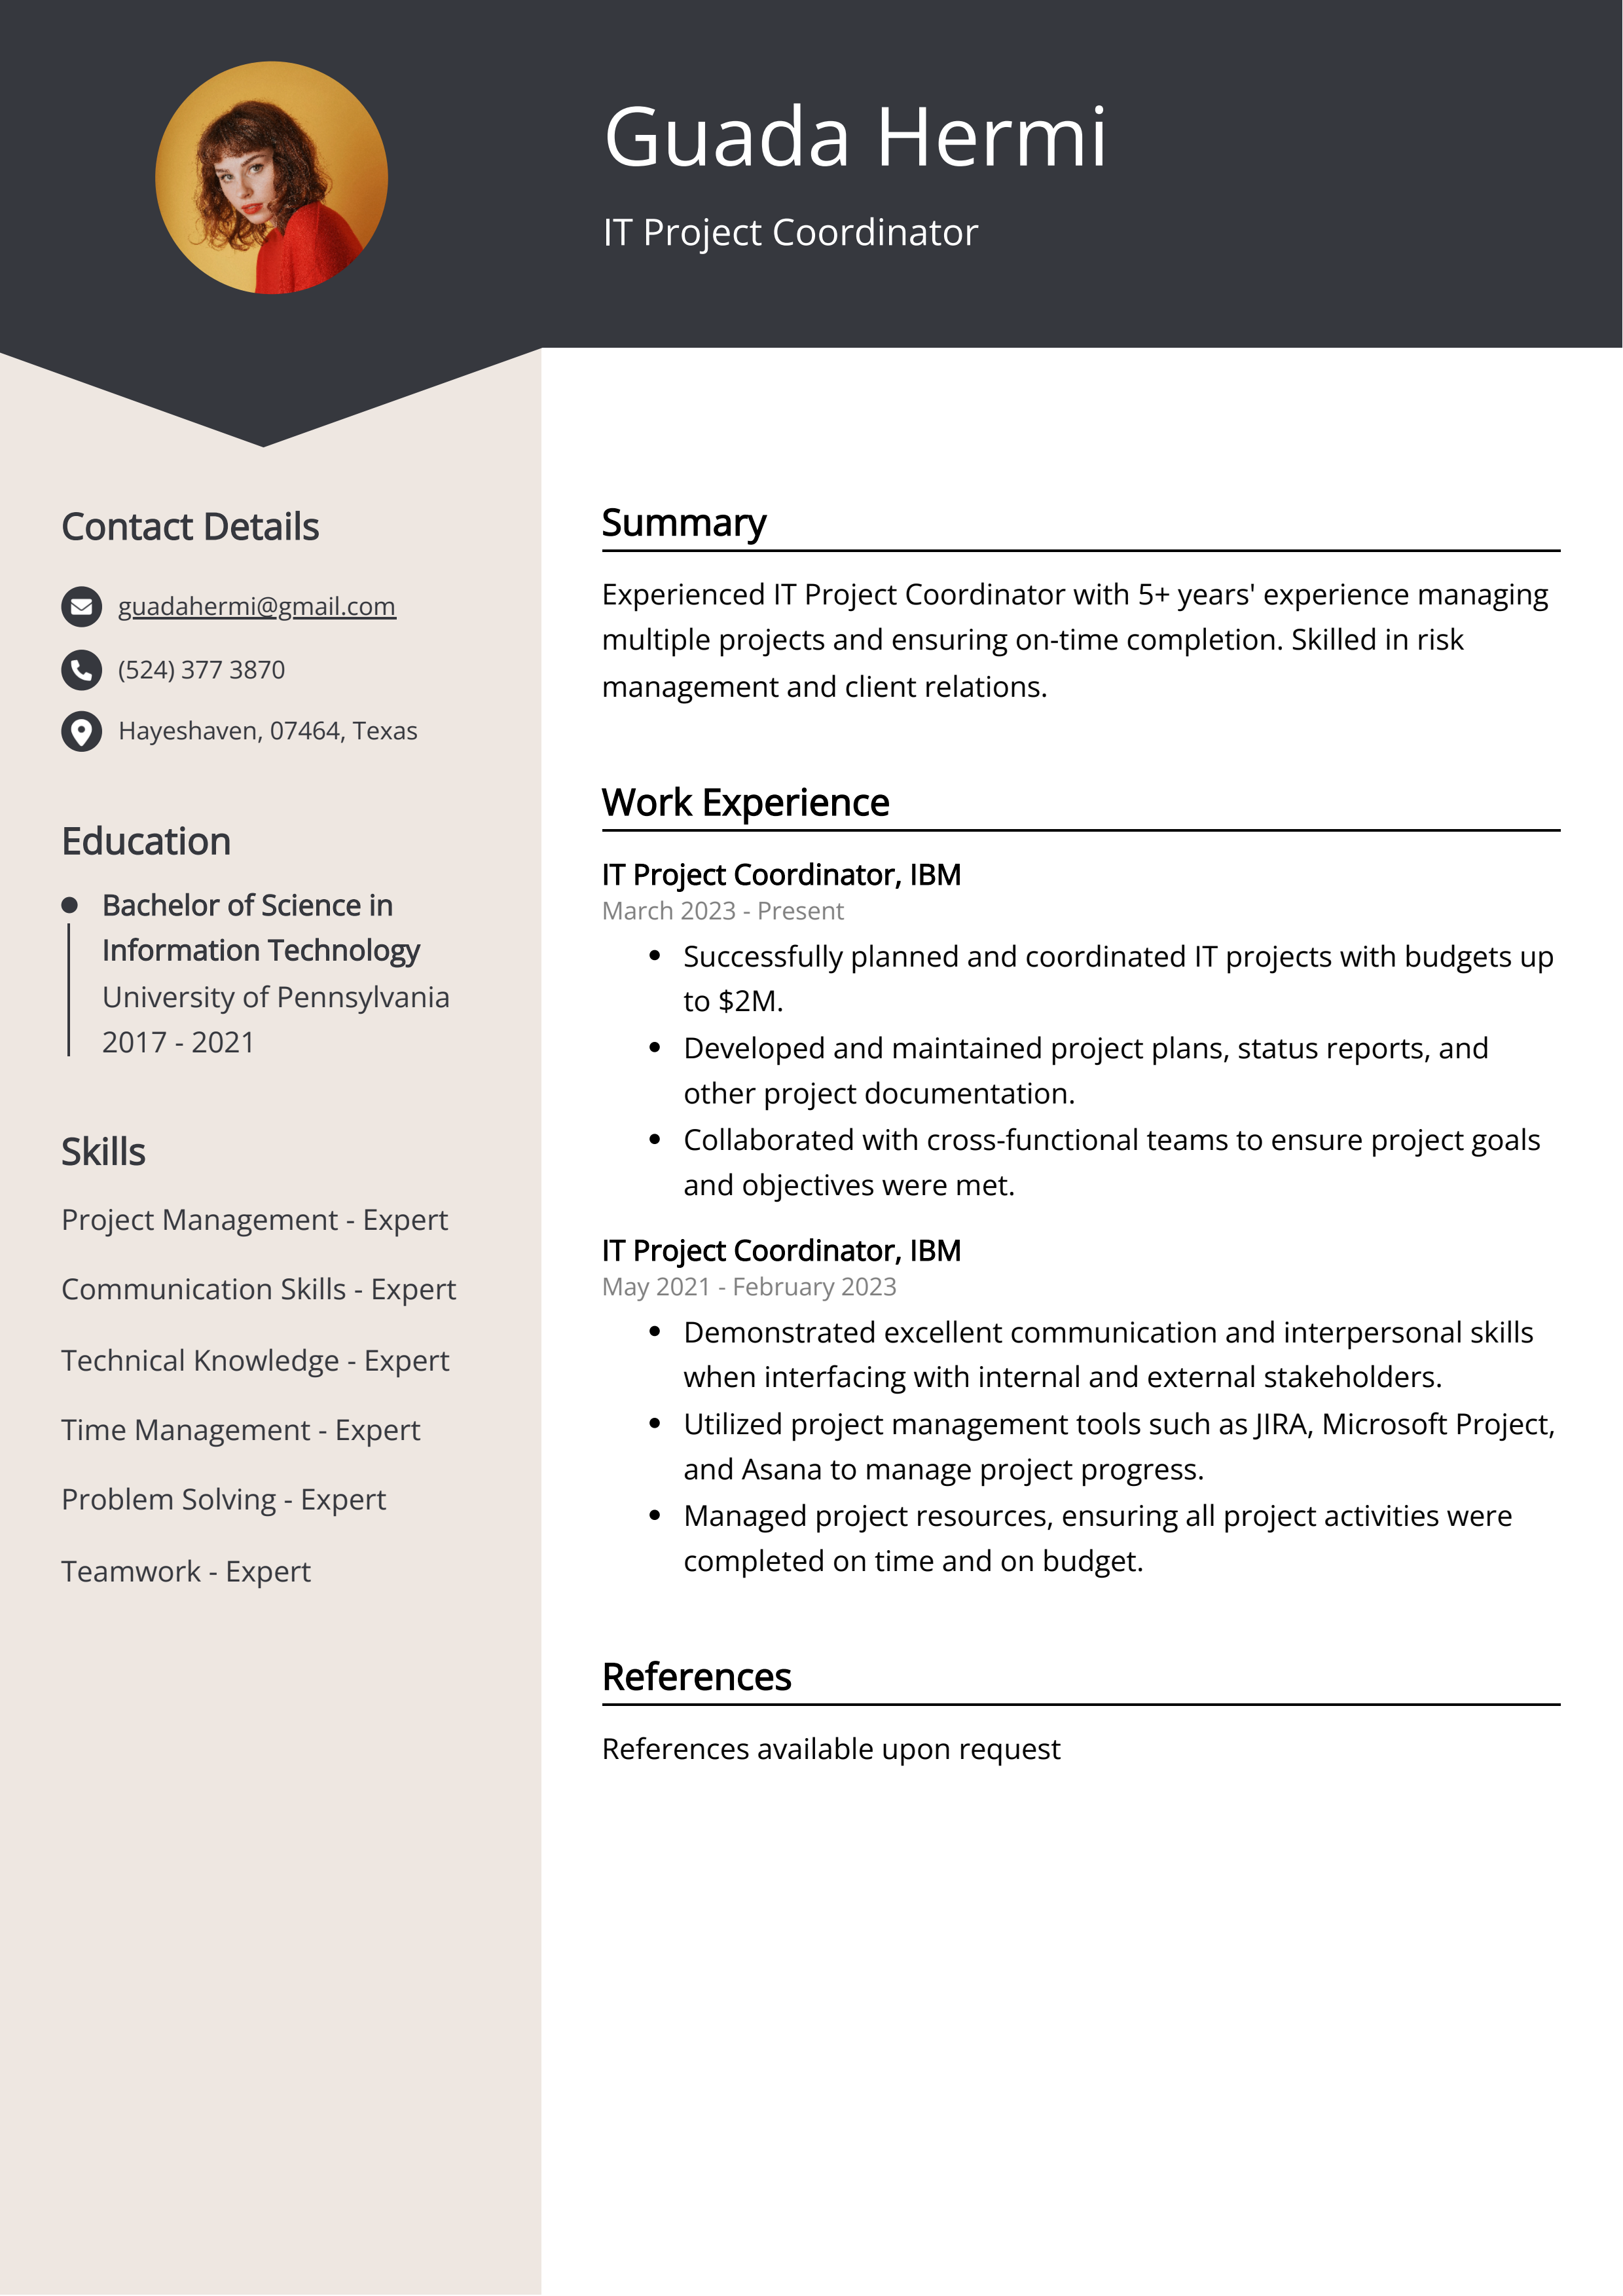 IT Project Coordinator CV Example